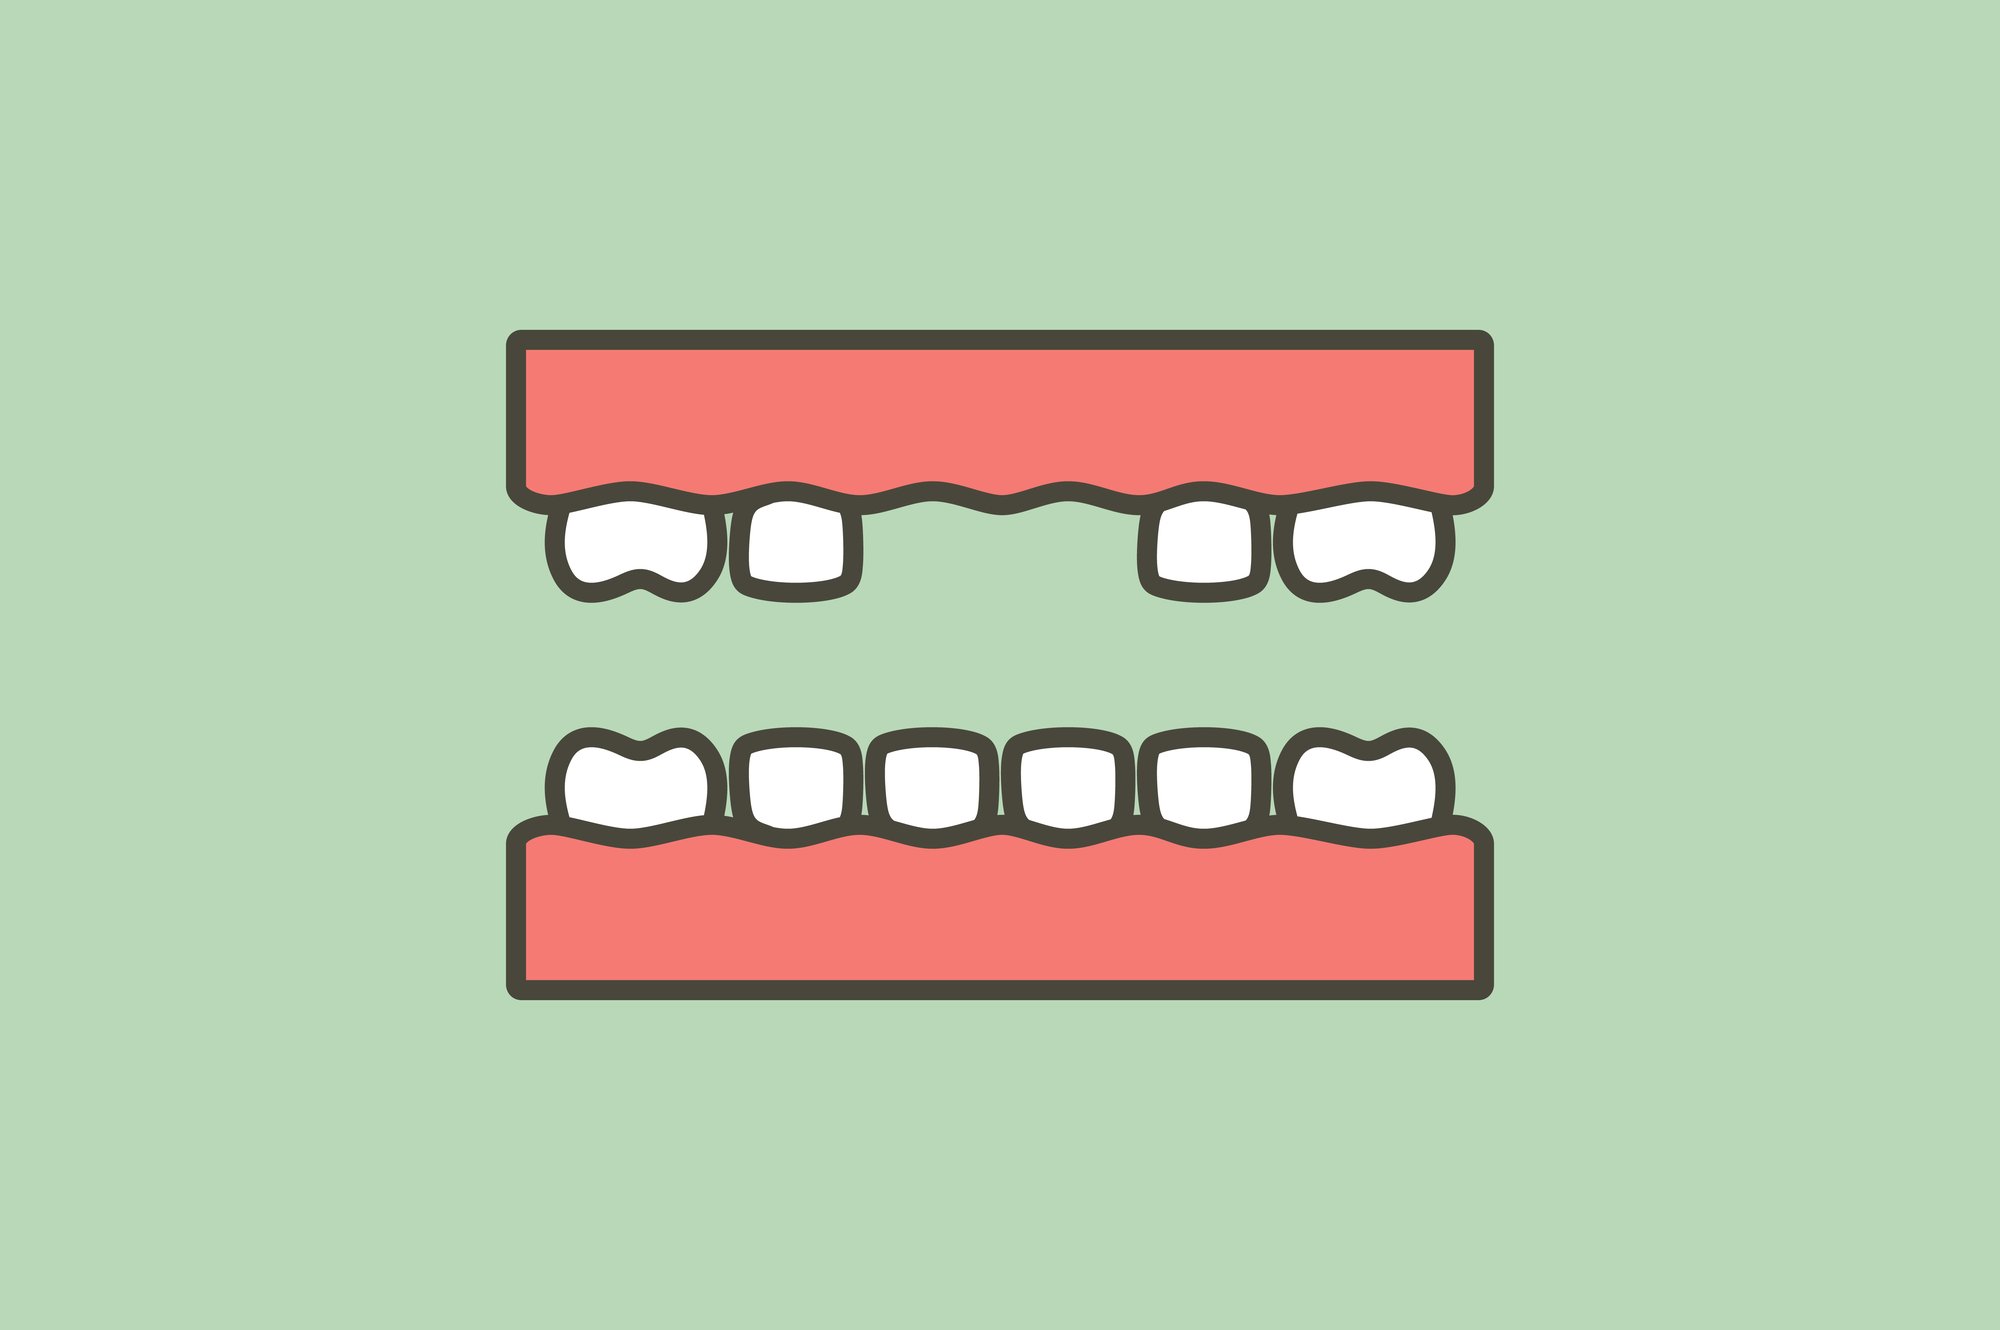 illustration of missing front teeth